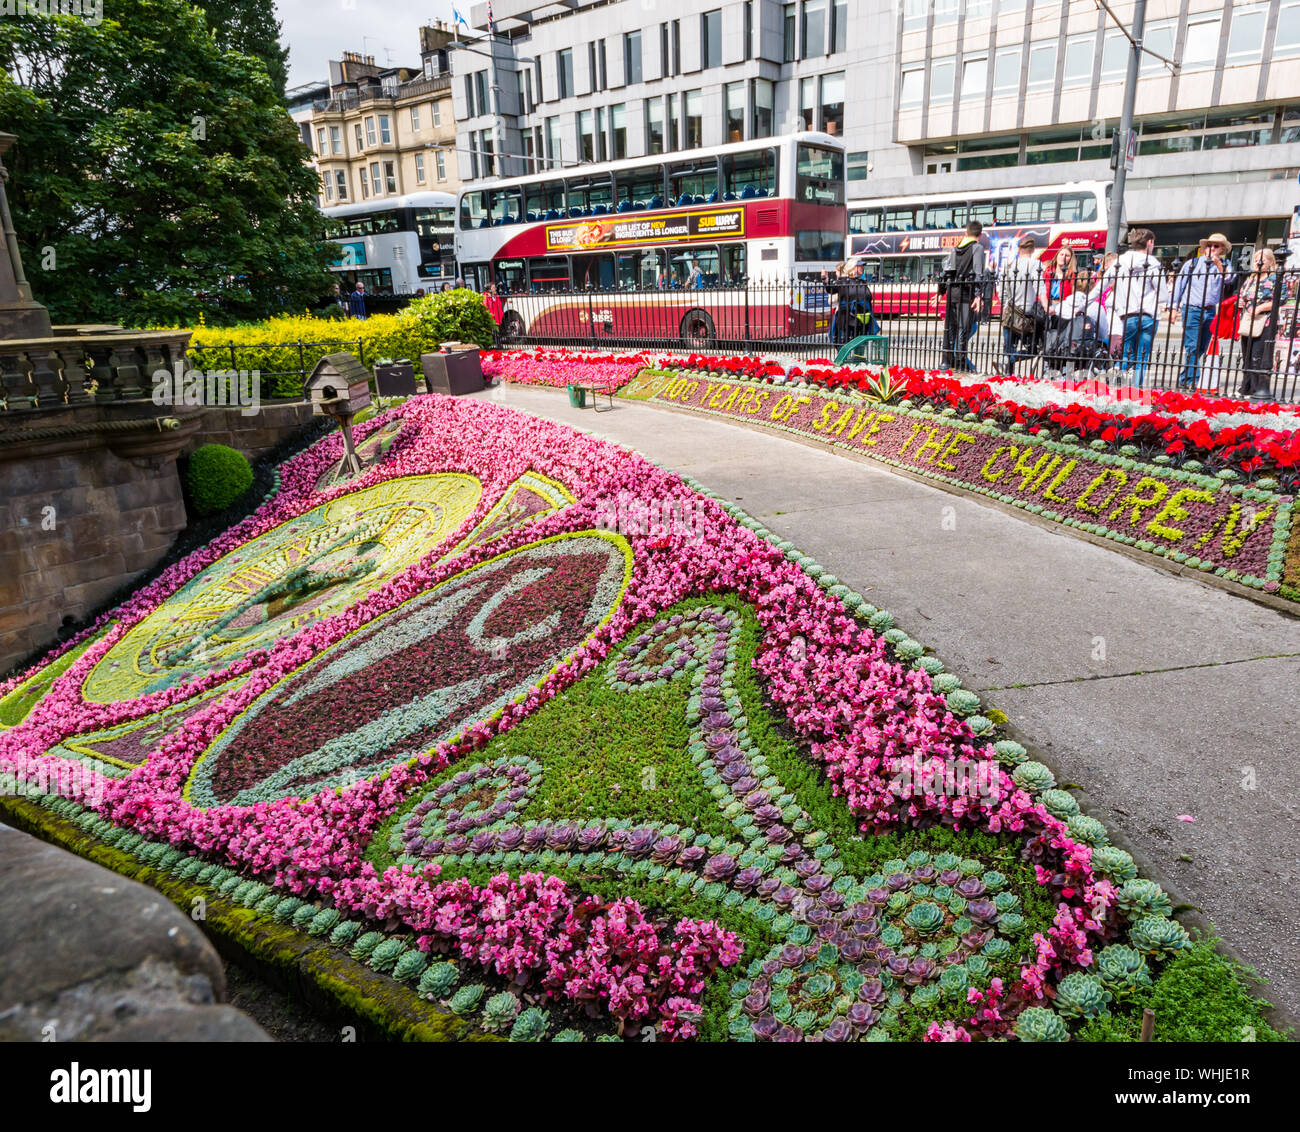 Famous historic oldest floral clock celebrates Save the Children centenary, Princes Street Gardens, Edinburgh, Scotland, UK in 2019 Stock Photo